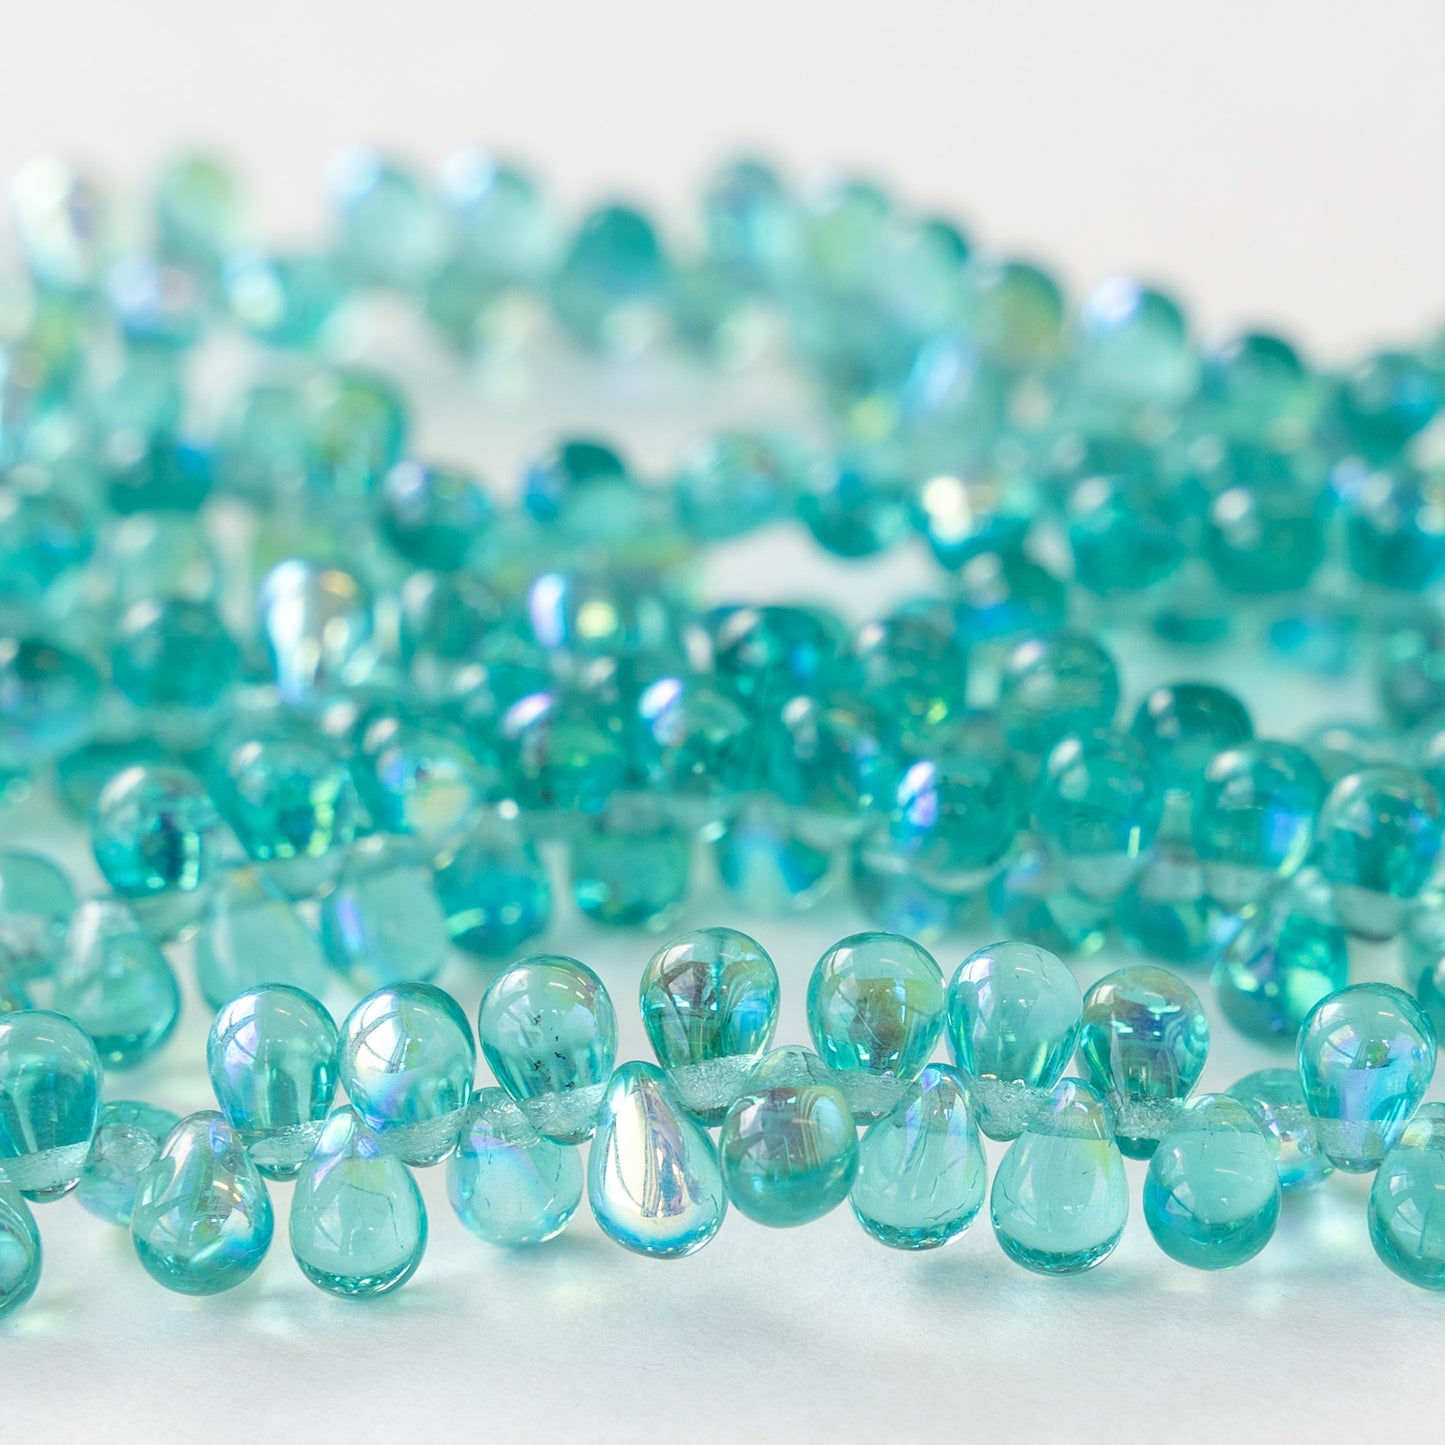 4x6mm Glass Teardrop Beads - Seafoam AB - 100 Beads